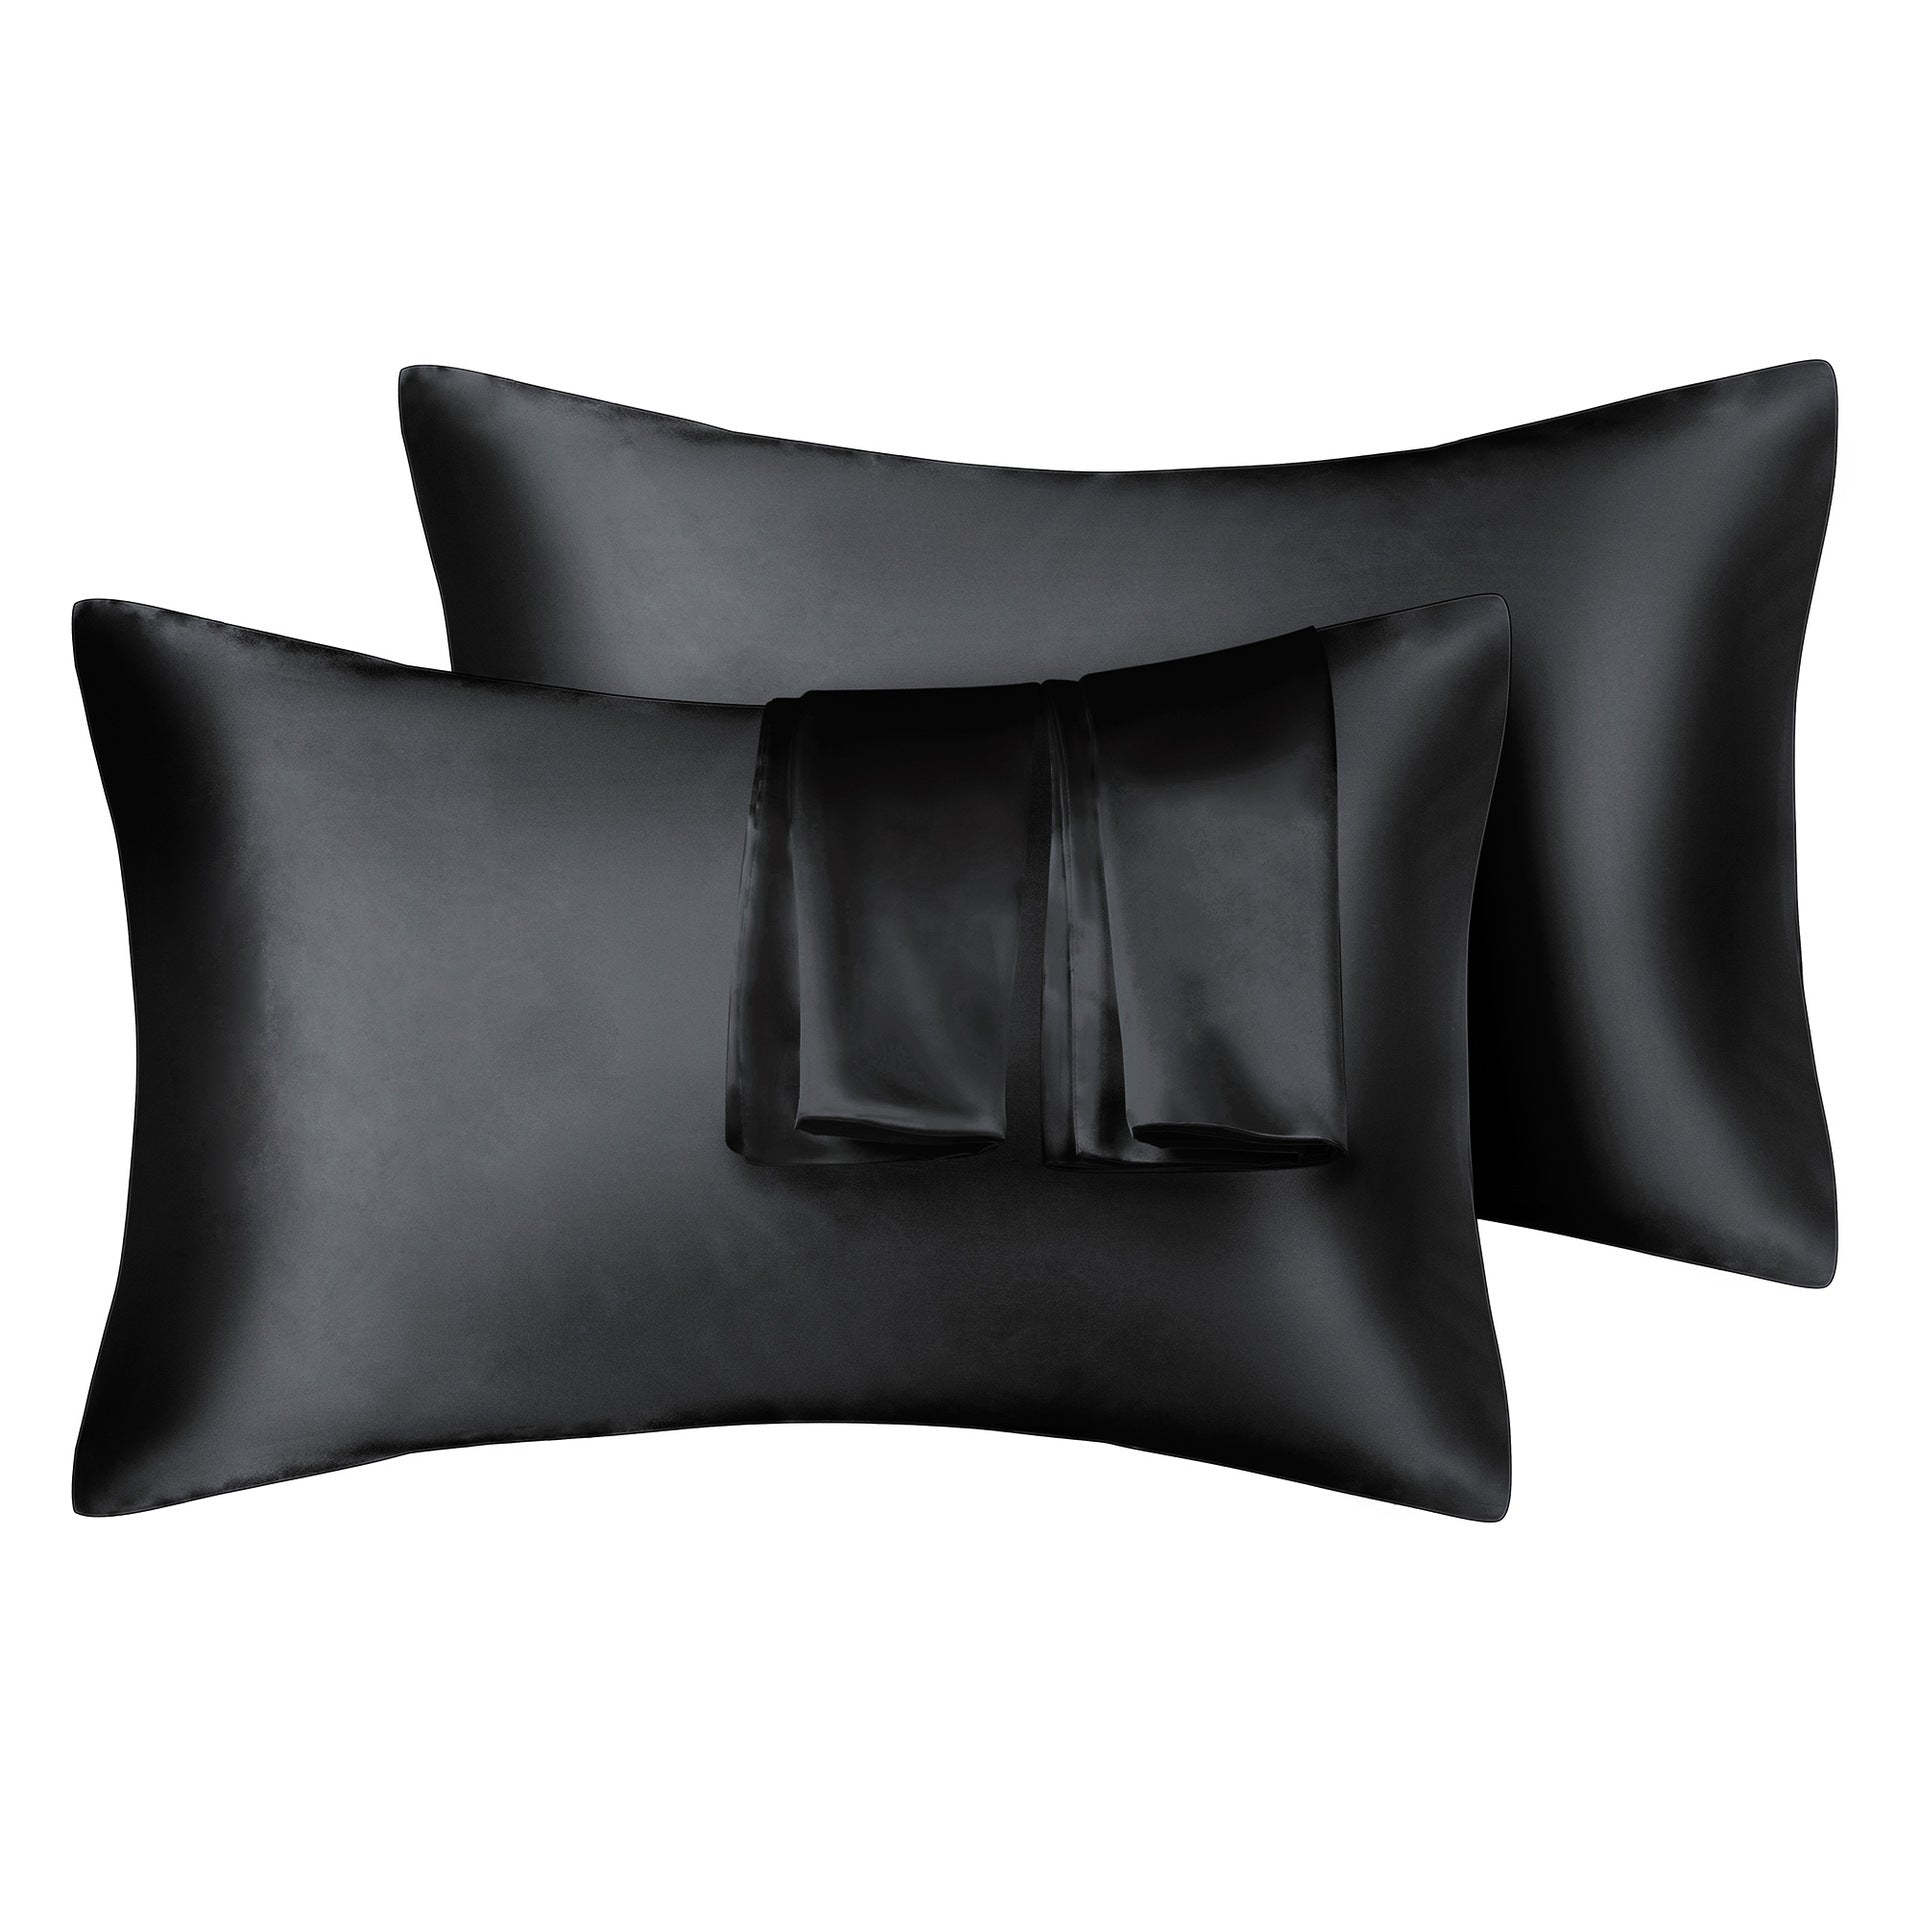 Importikaah-Silk-Pillowcase-single-pack-Elegant-designed-combine-luxury-skincare-haircare-benefits- high-quality